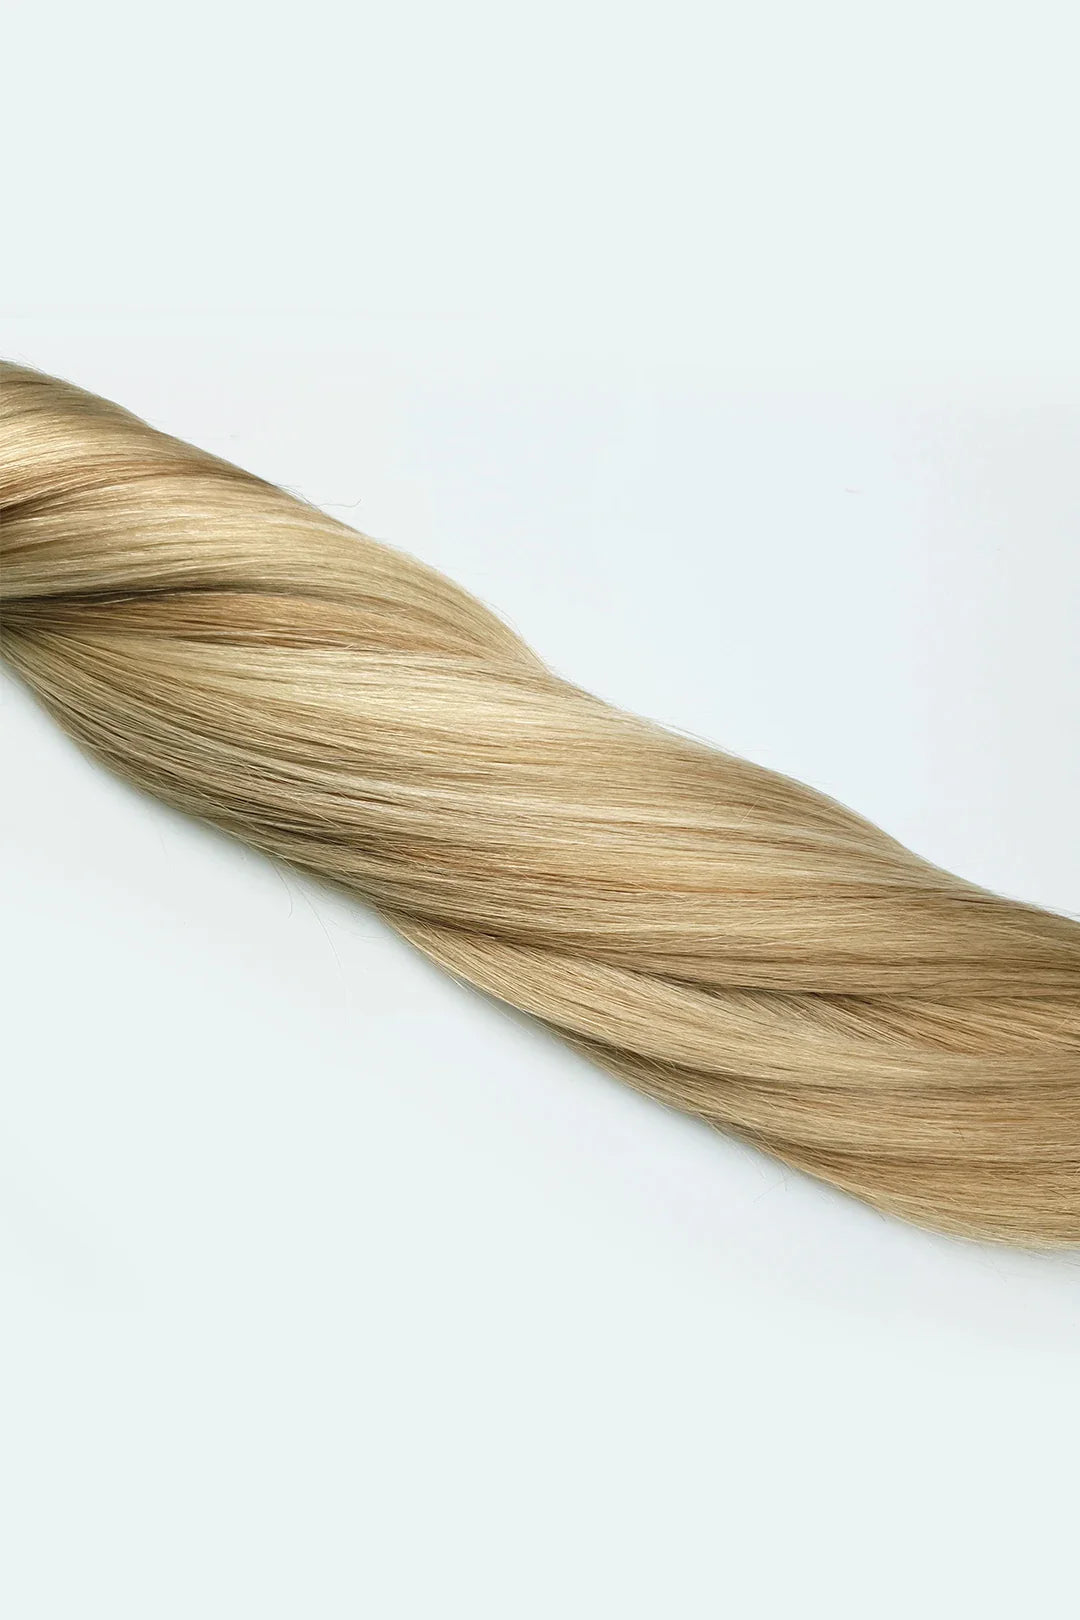 Licht blonde highlights clip-in hairextensions ☀️ 30cm - 230g